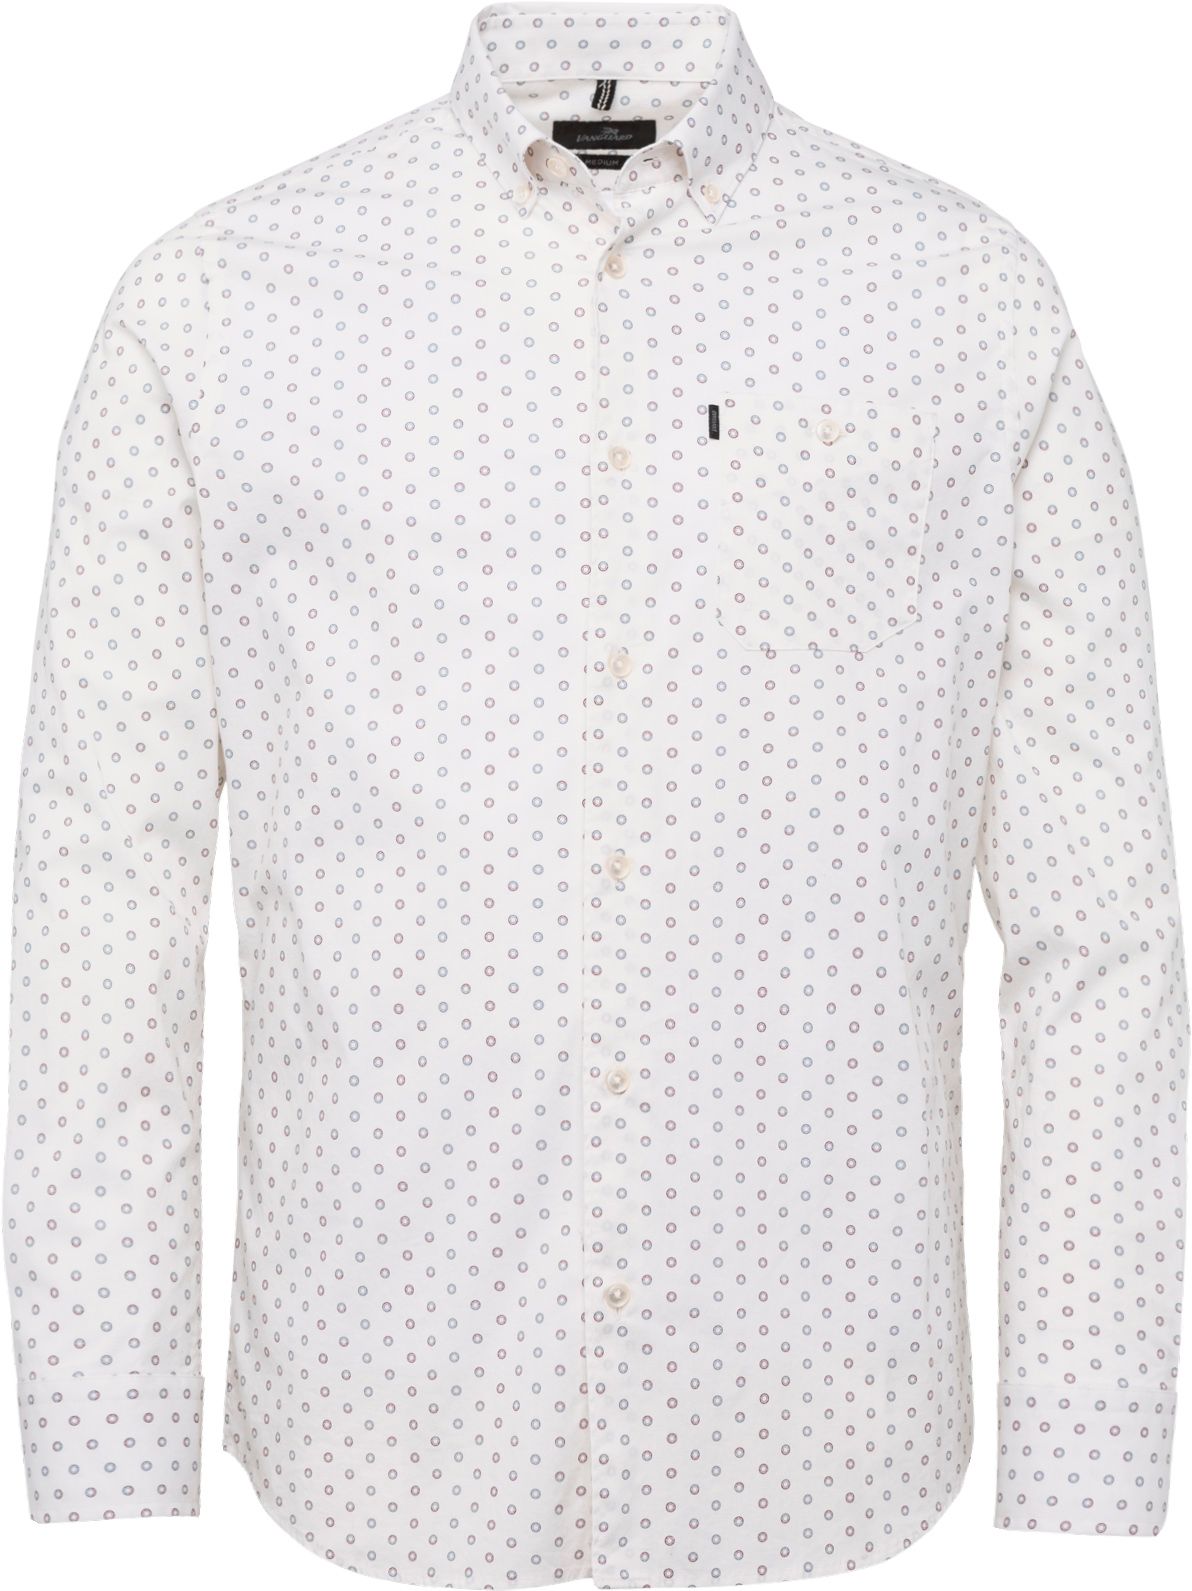 Vanguard Shirt Poplin Dots White size L